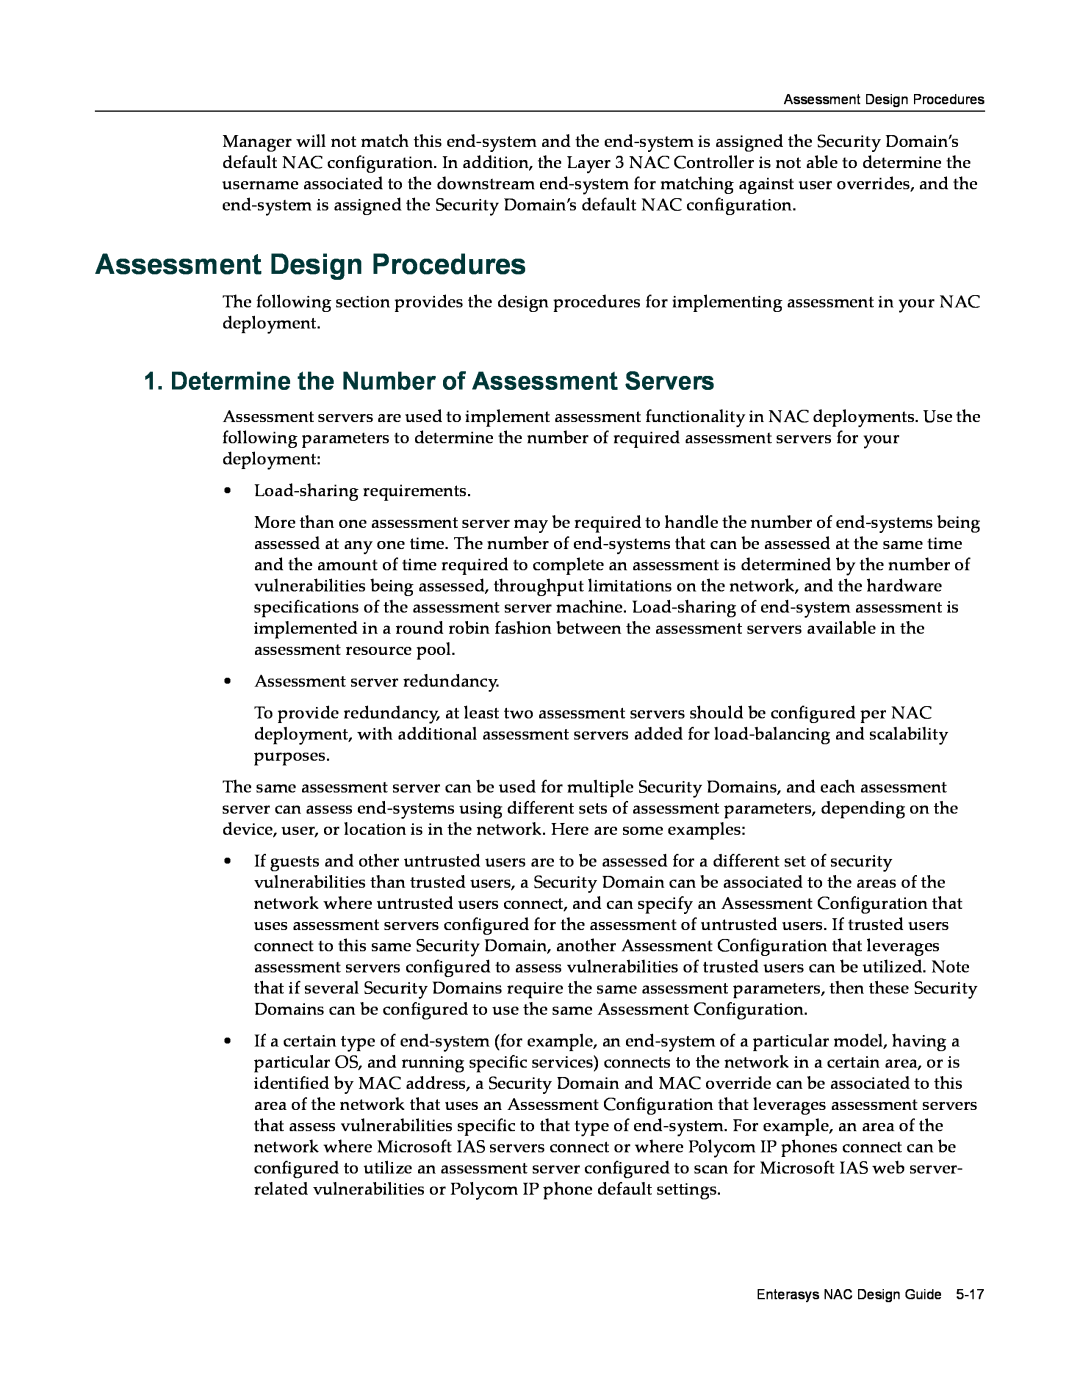 Enterasys Networks 9034385 manual Assessment Design Procedures, Determine the Number of Assessment Servers 